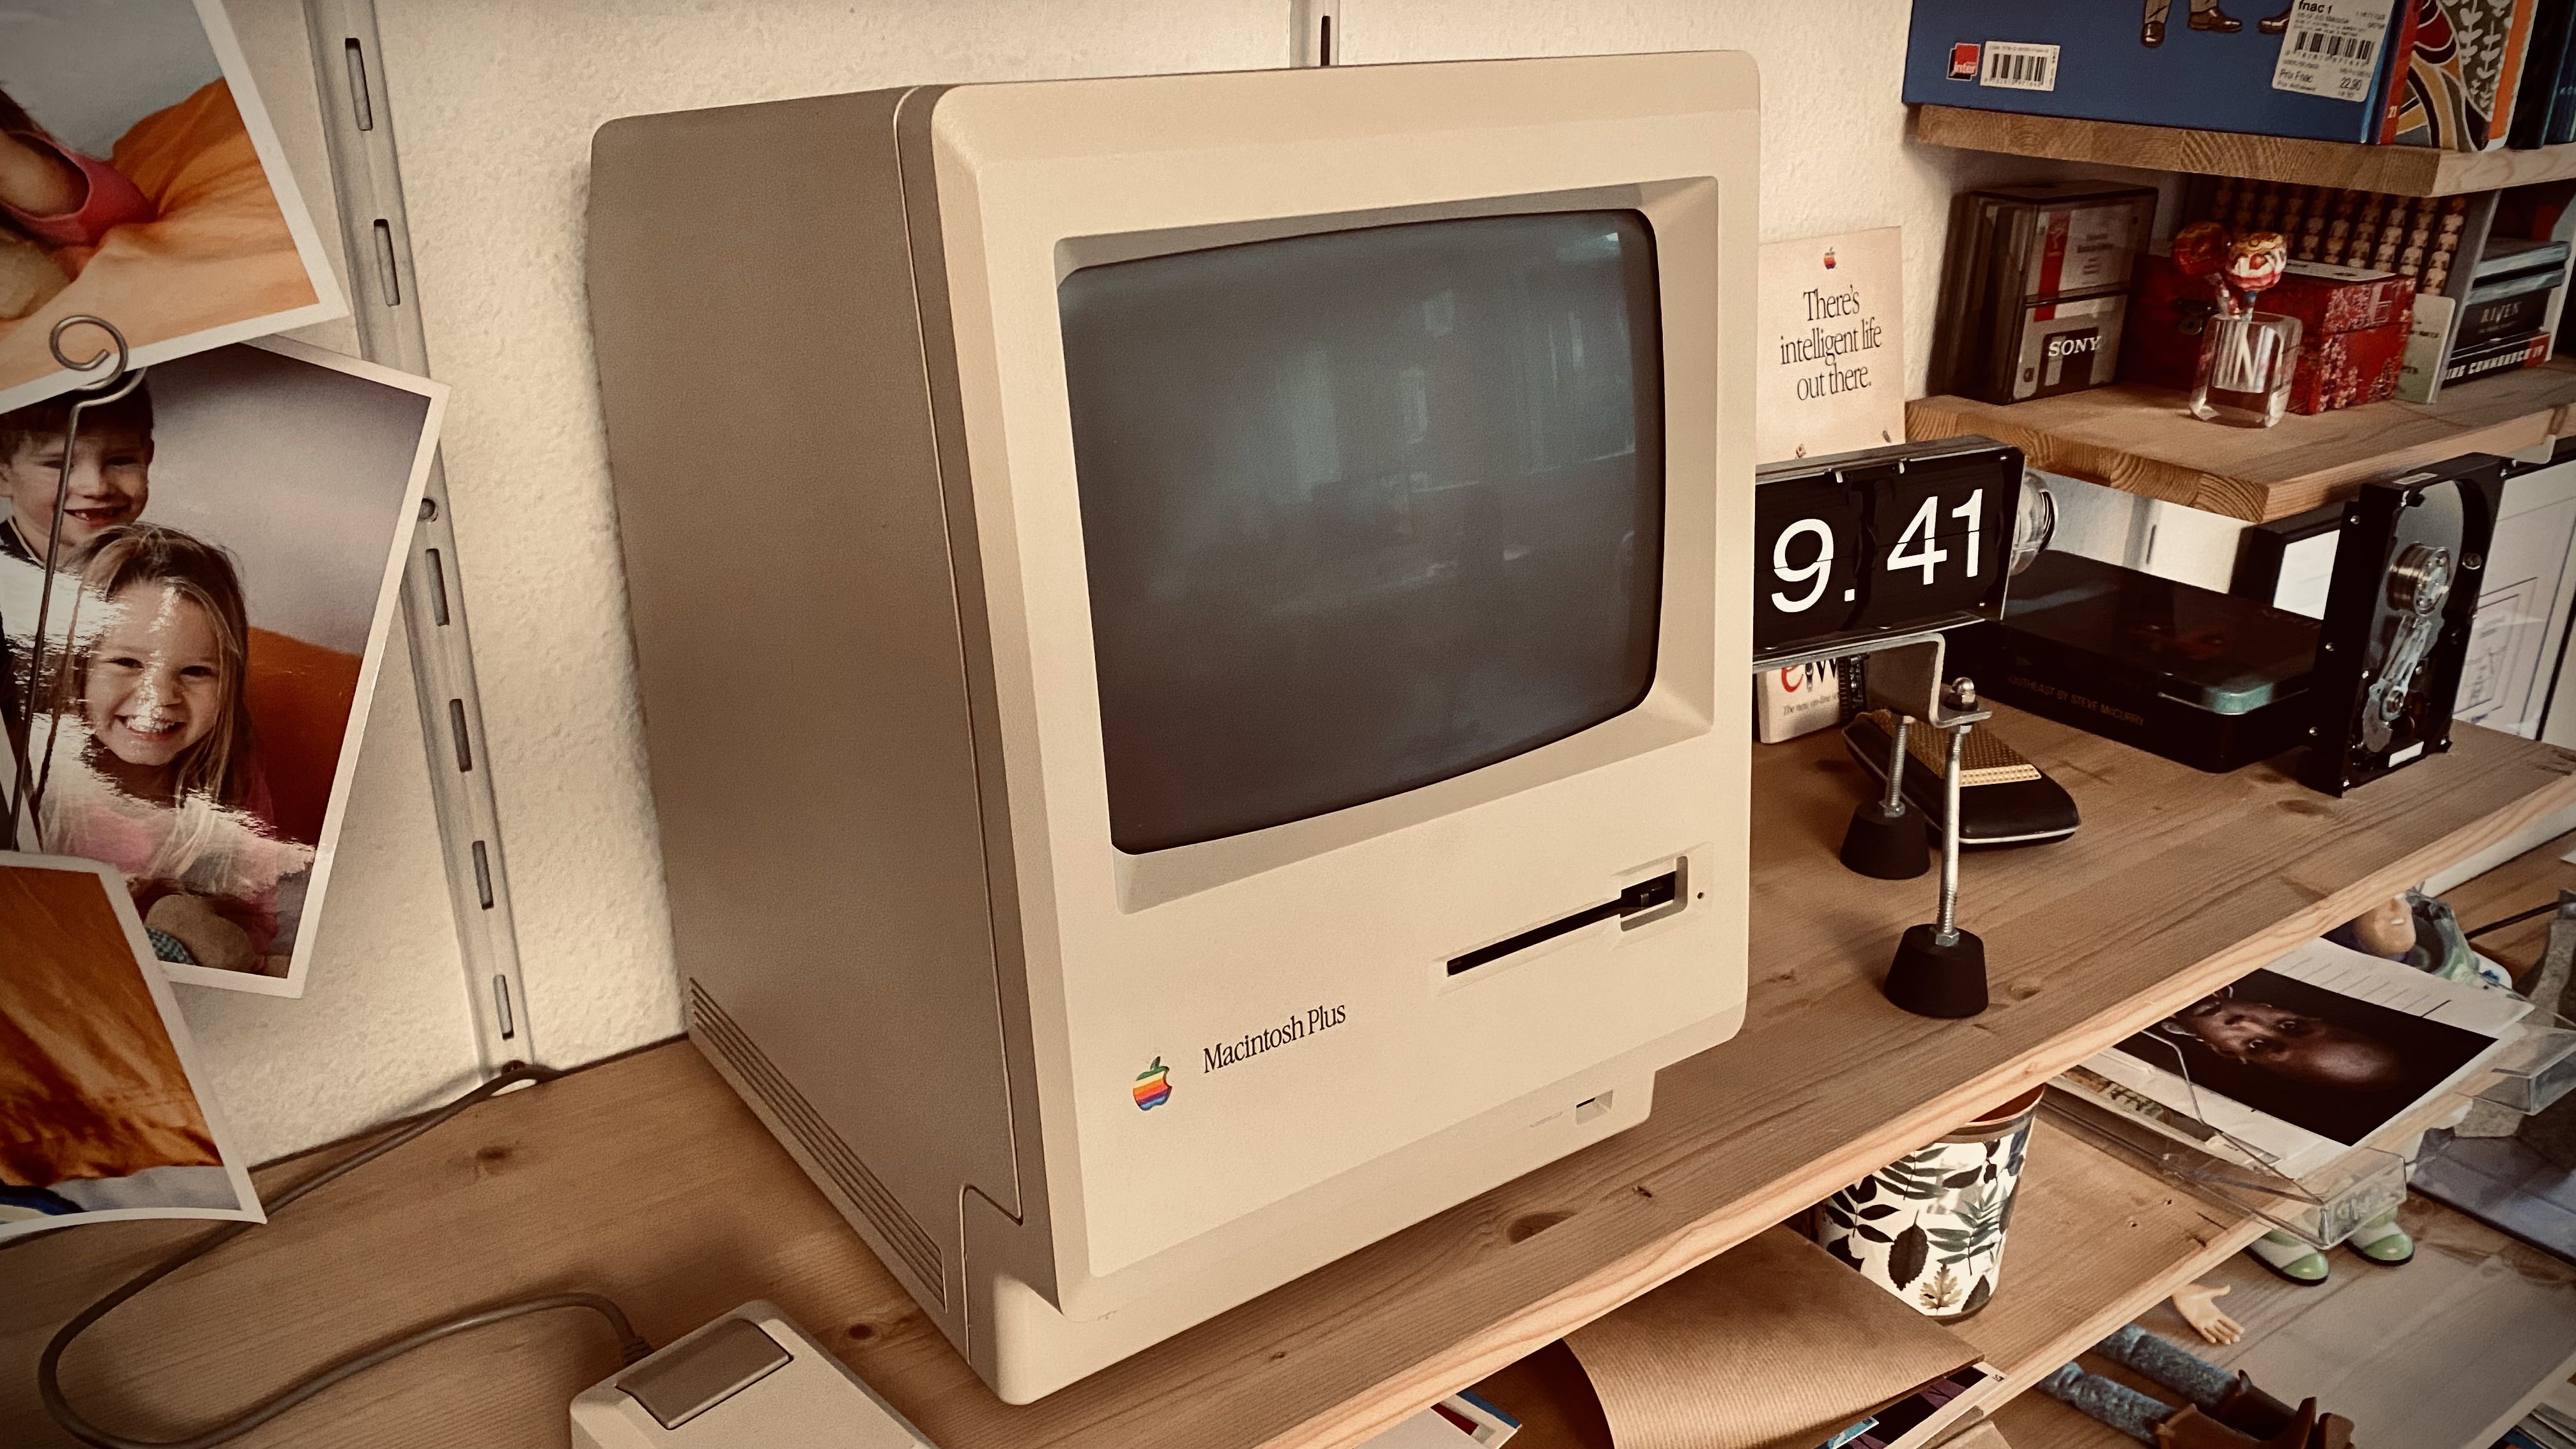 A smiling original Mac Plus 512